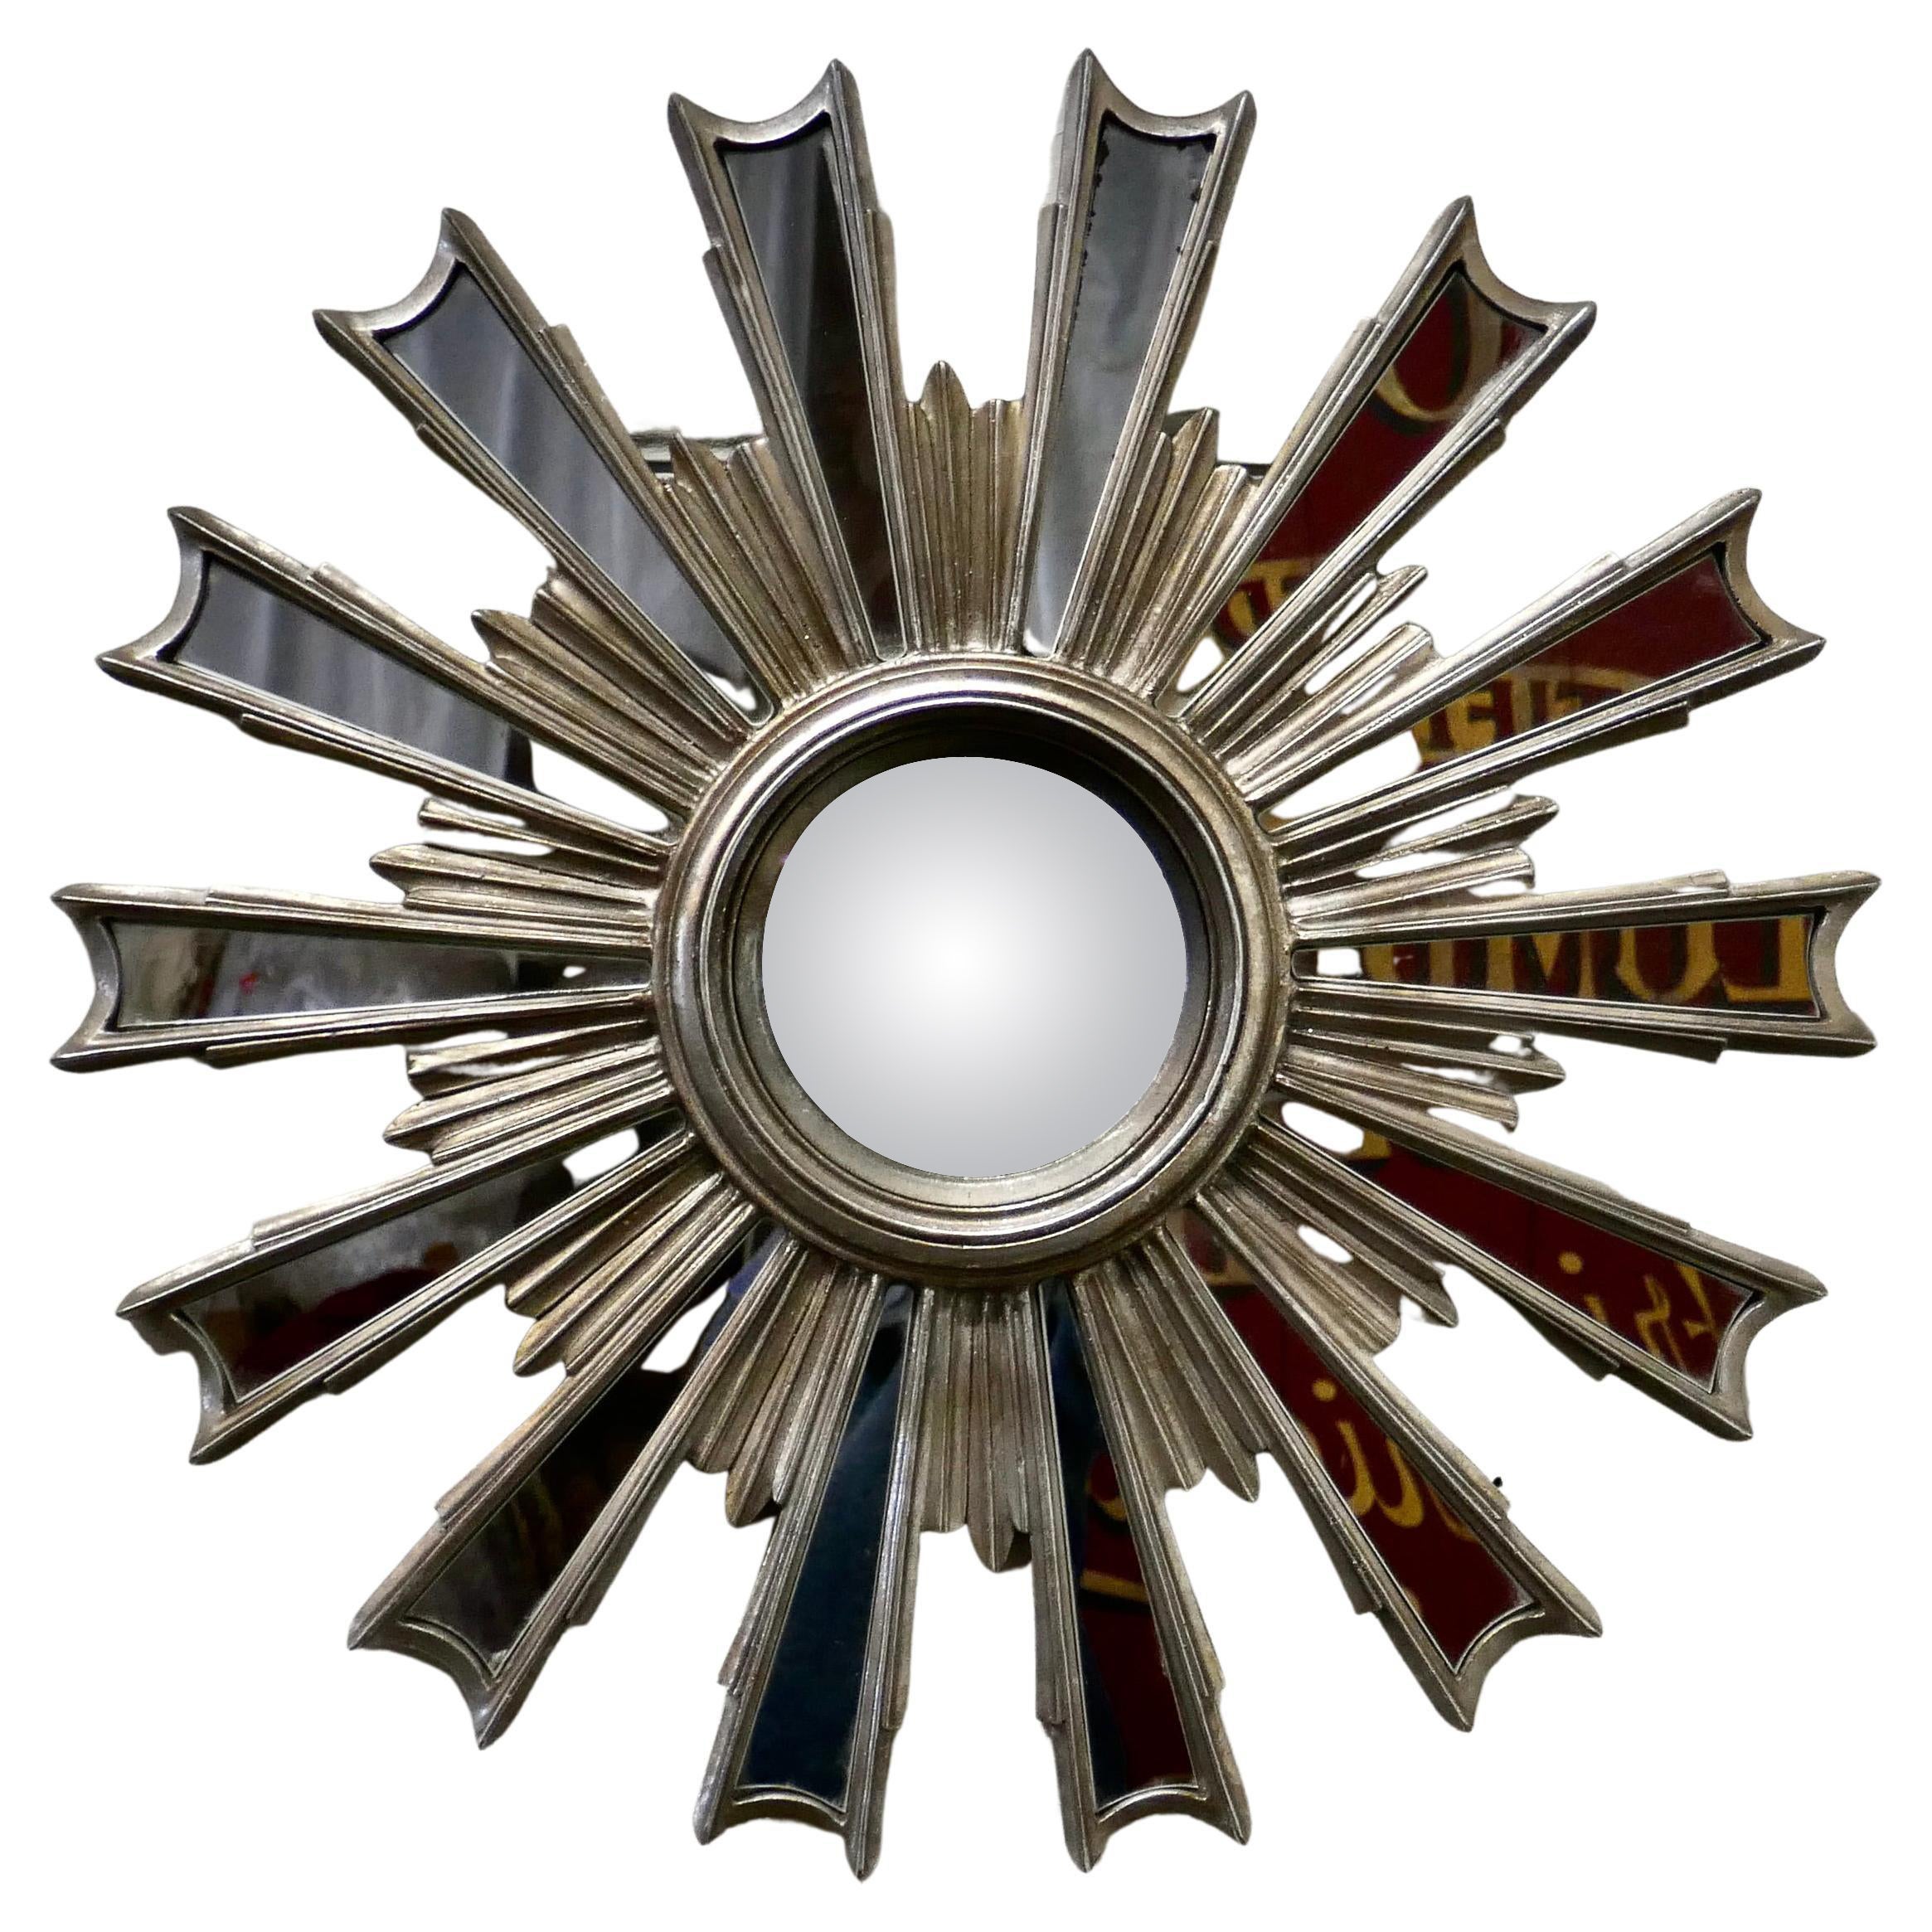 French Retro Sunburst Industrial Look Polished Mirror